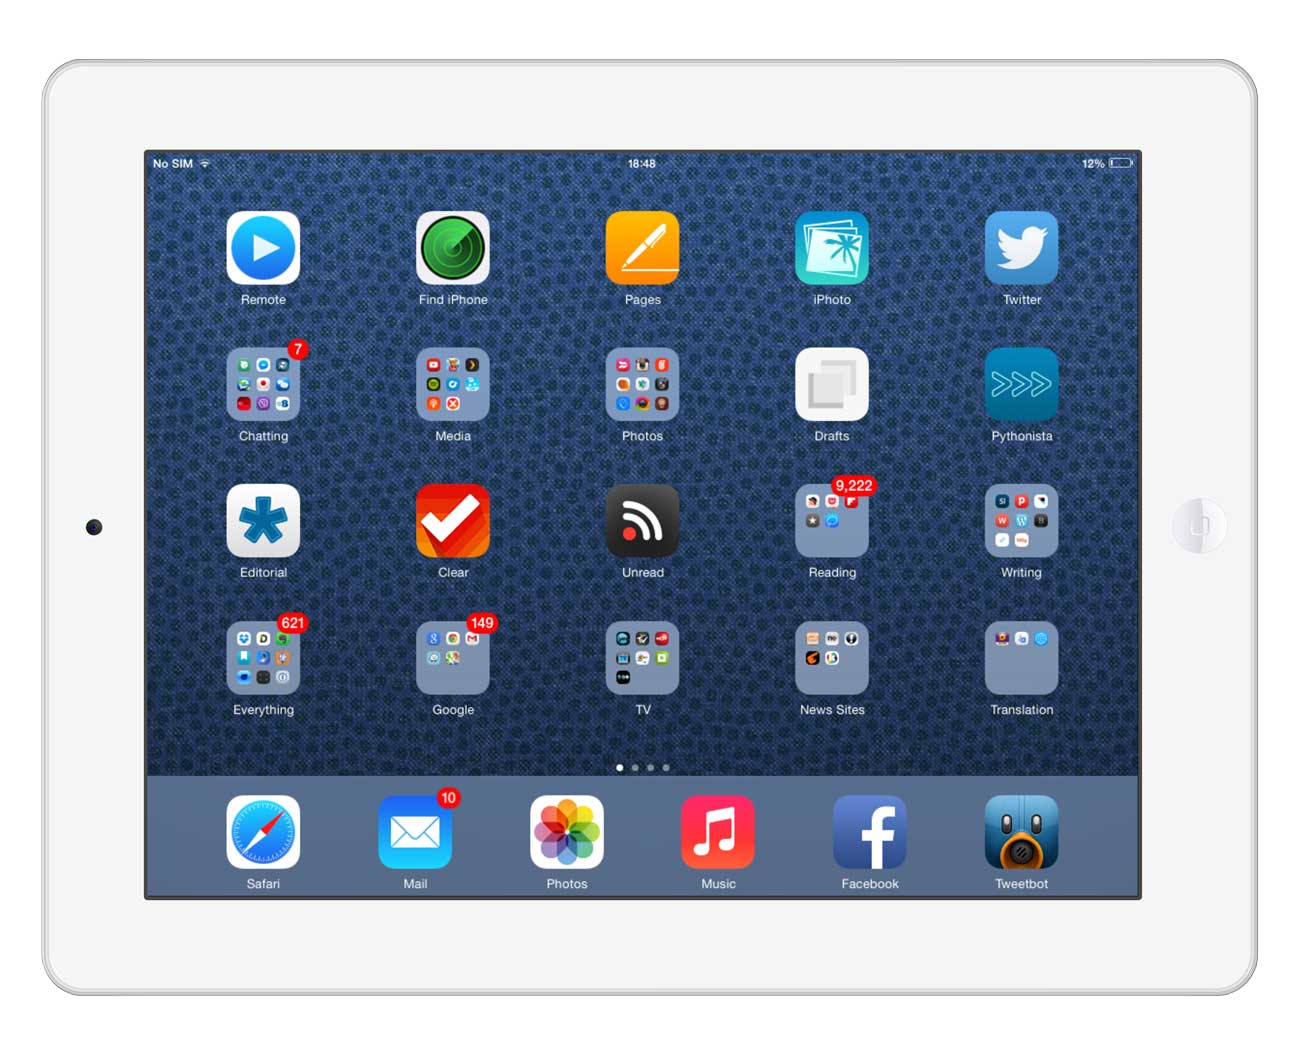 Shahaf Levi's iPad